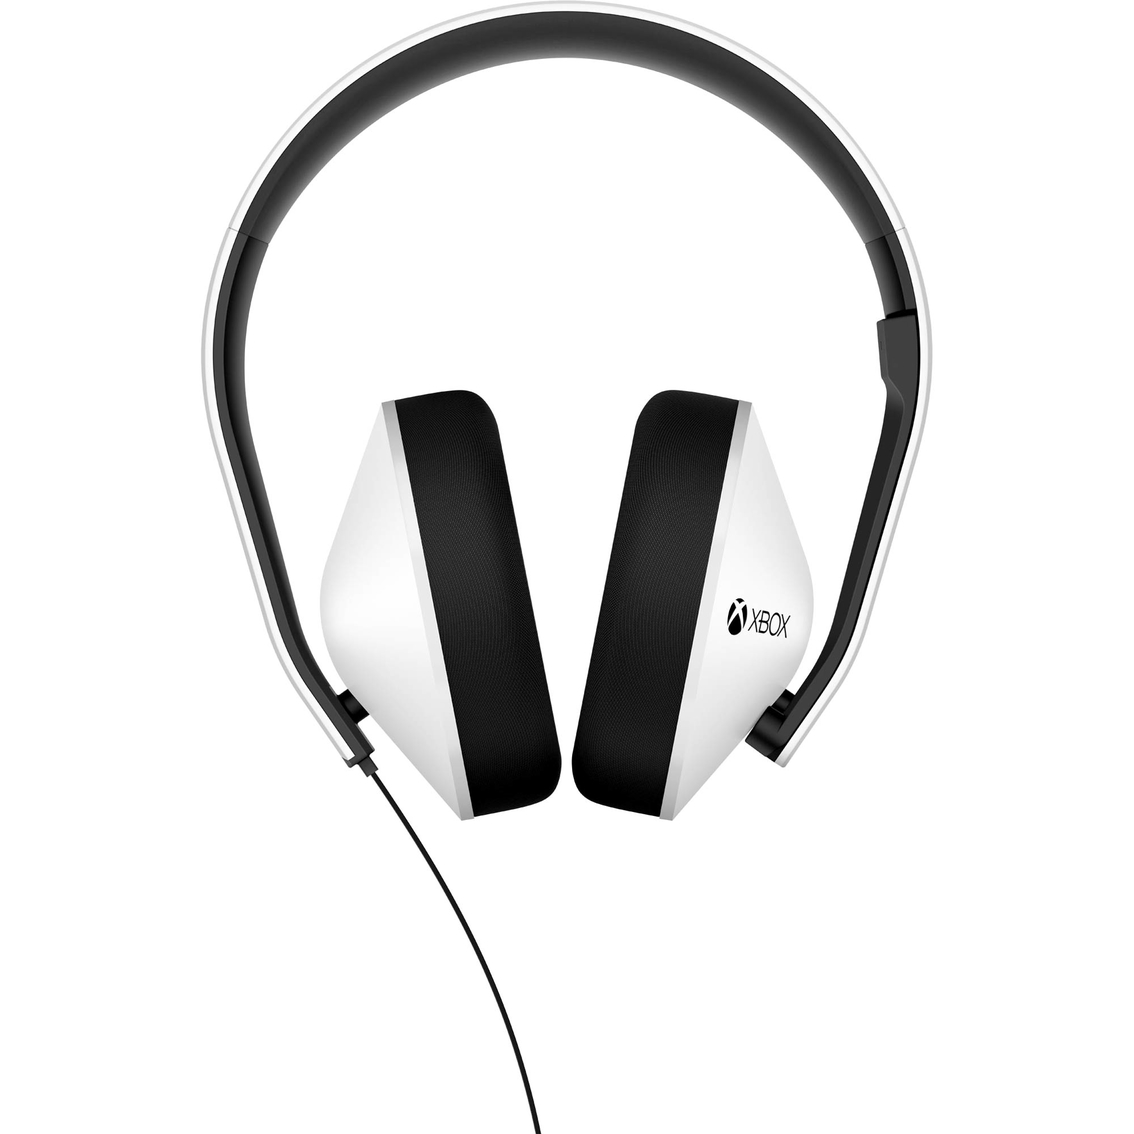 Microsoft Xbox Stereo Headset - Image 2 of 4